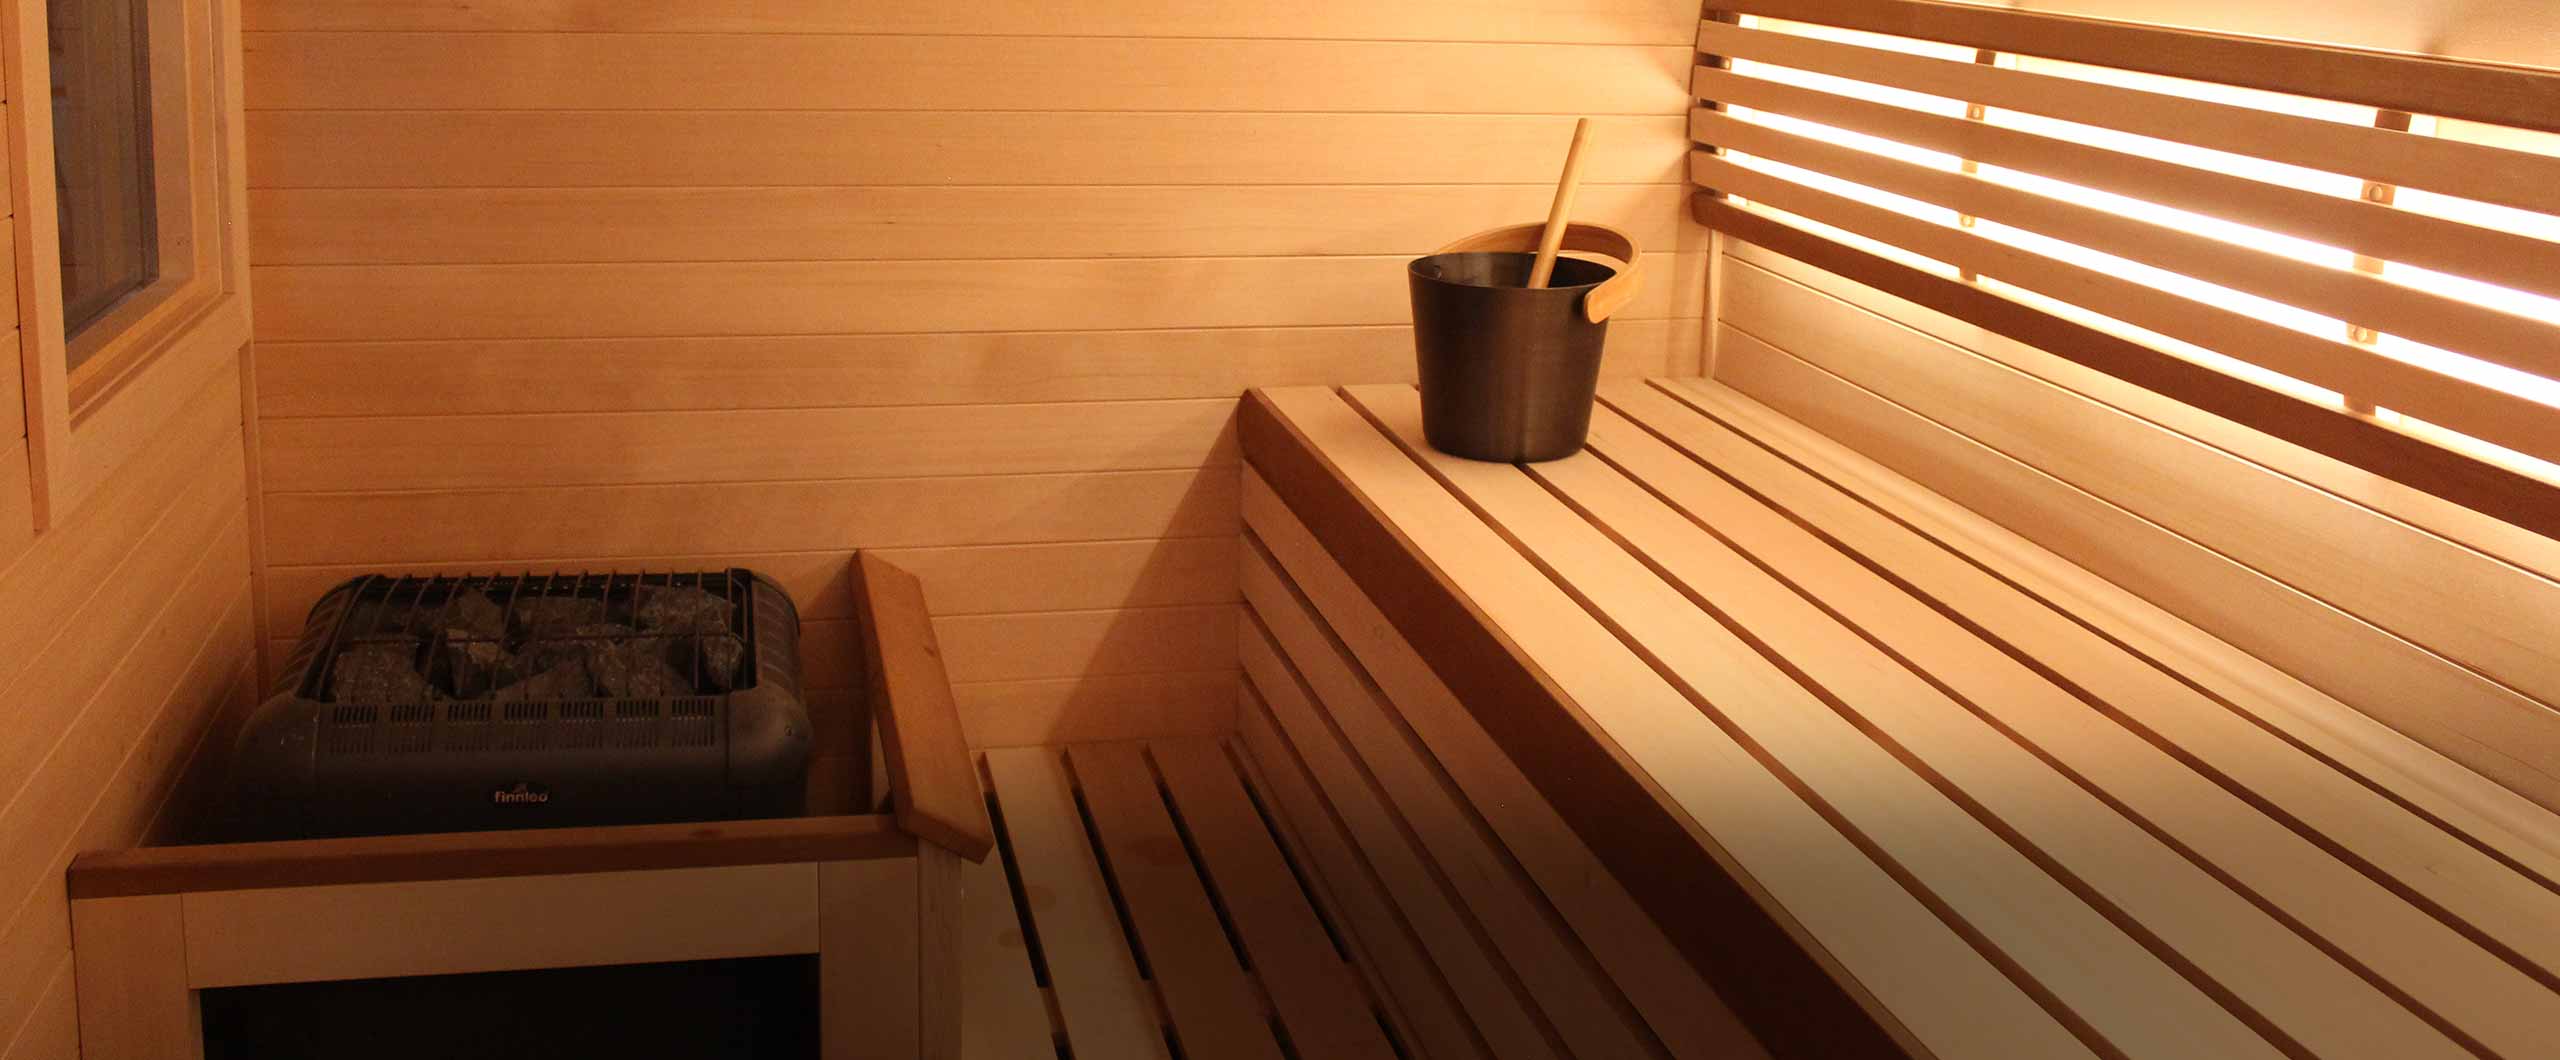 laava electric sauna heater